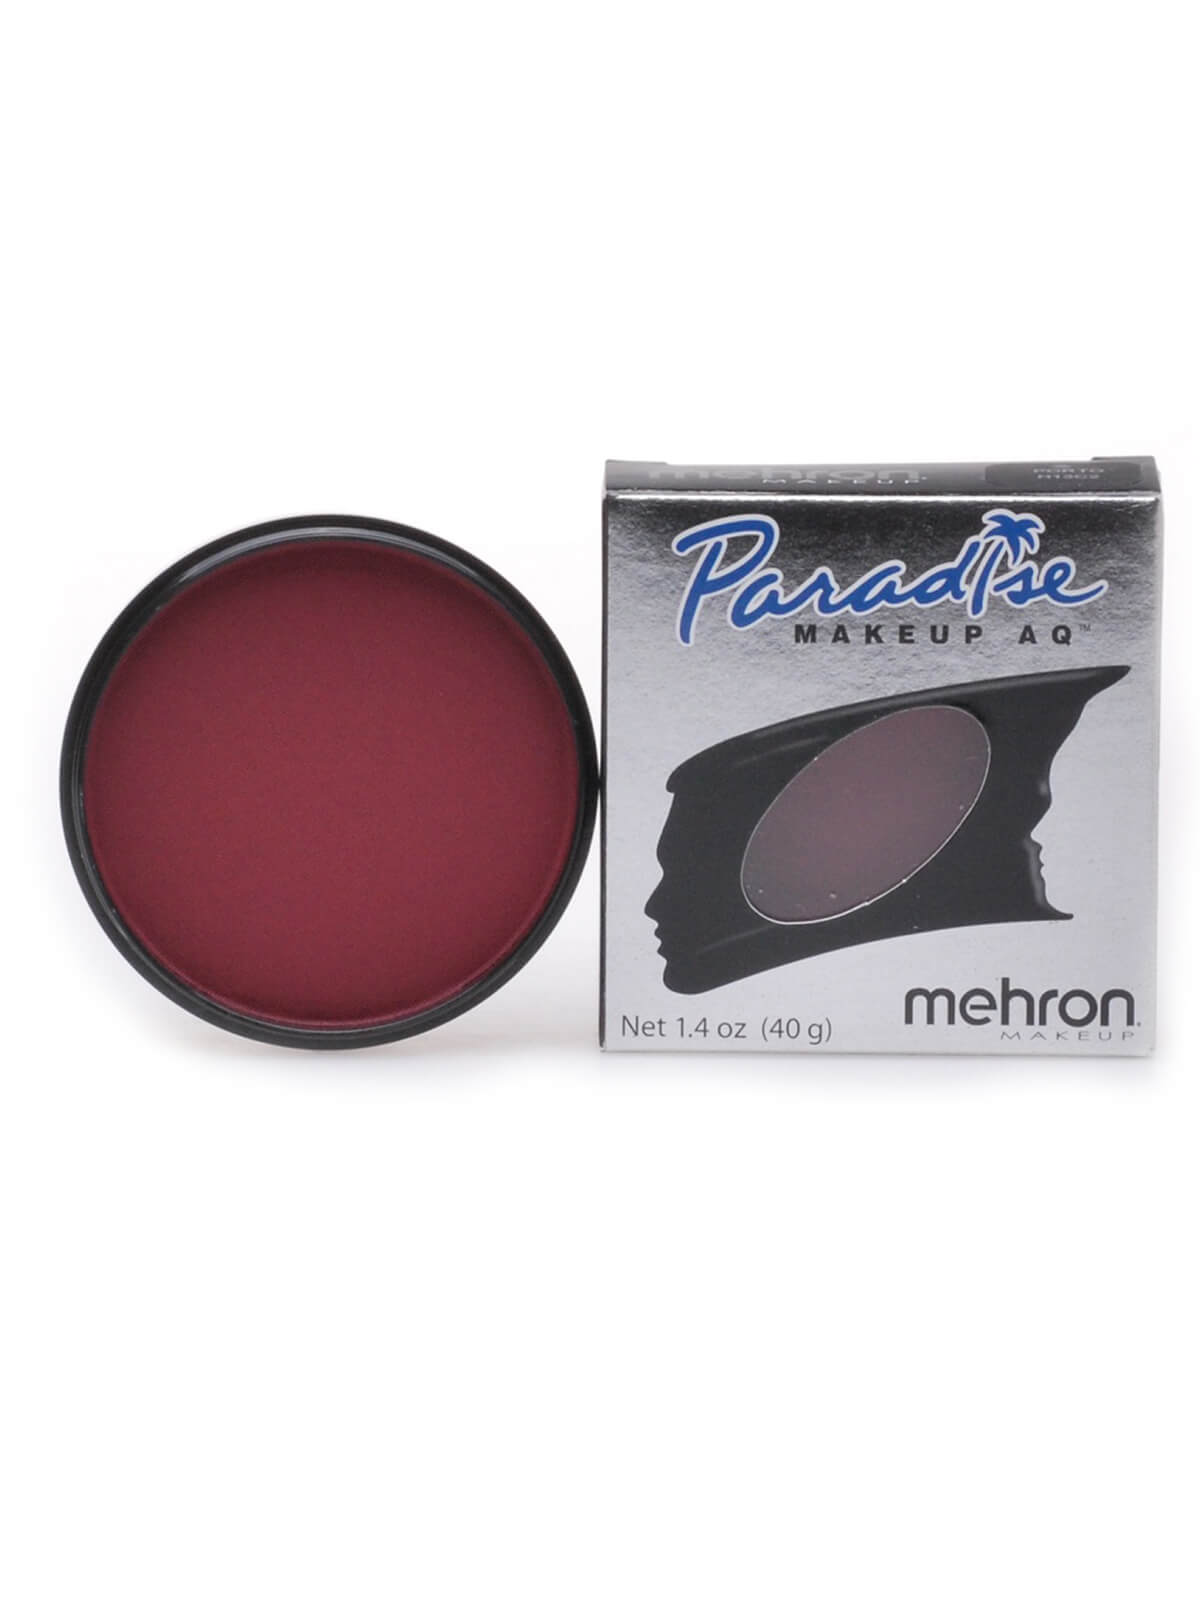 Mehron Paradise Makeup AQ - Nuance - Porto